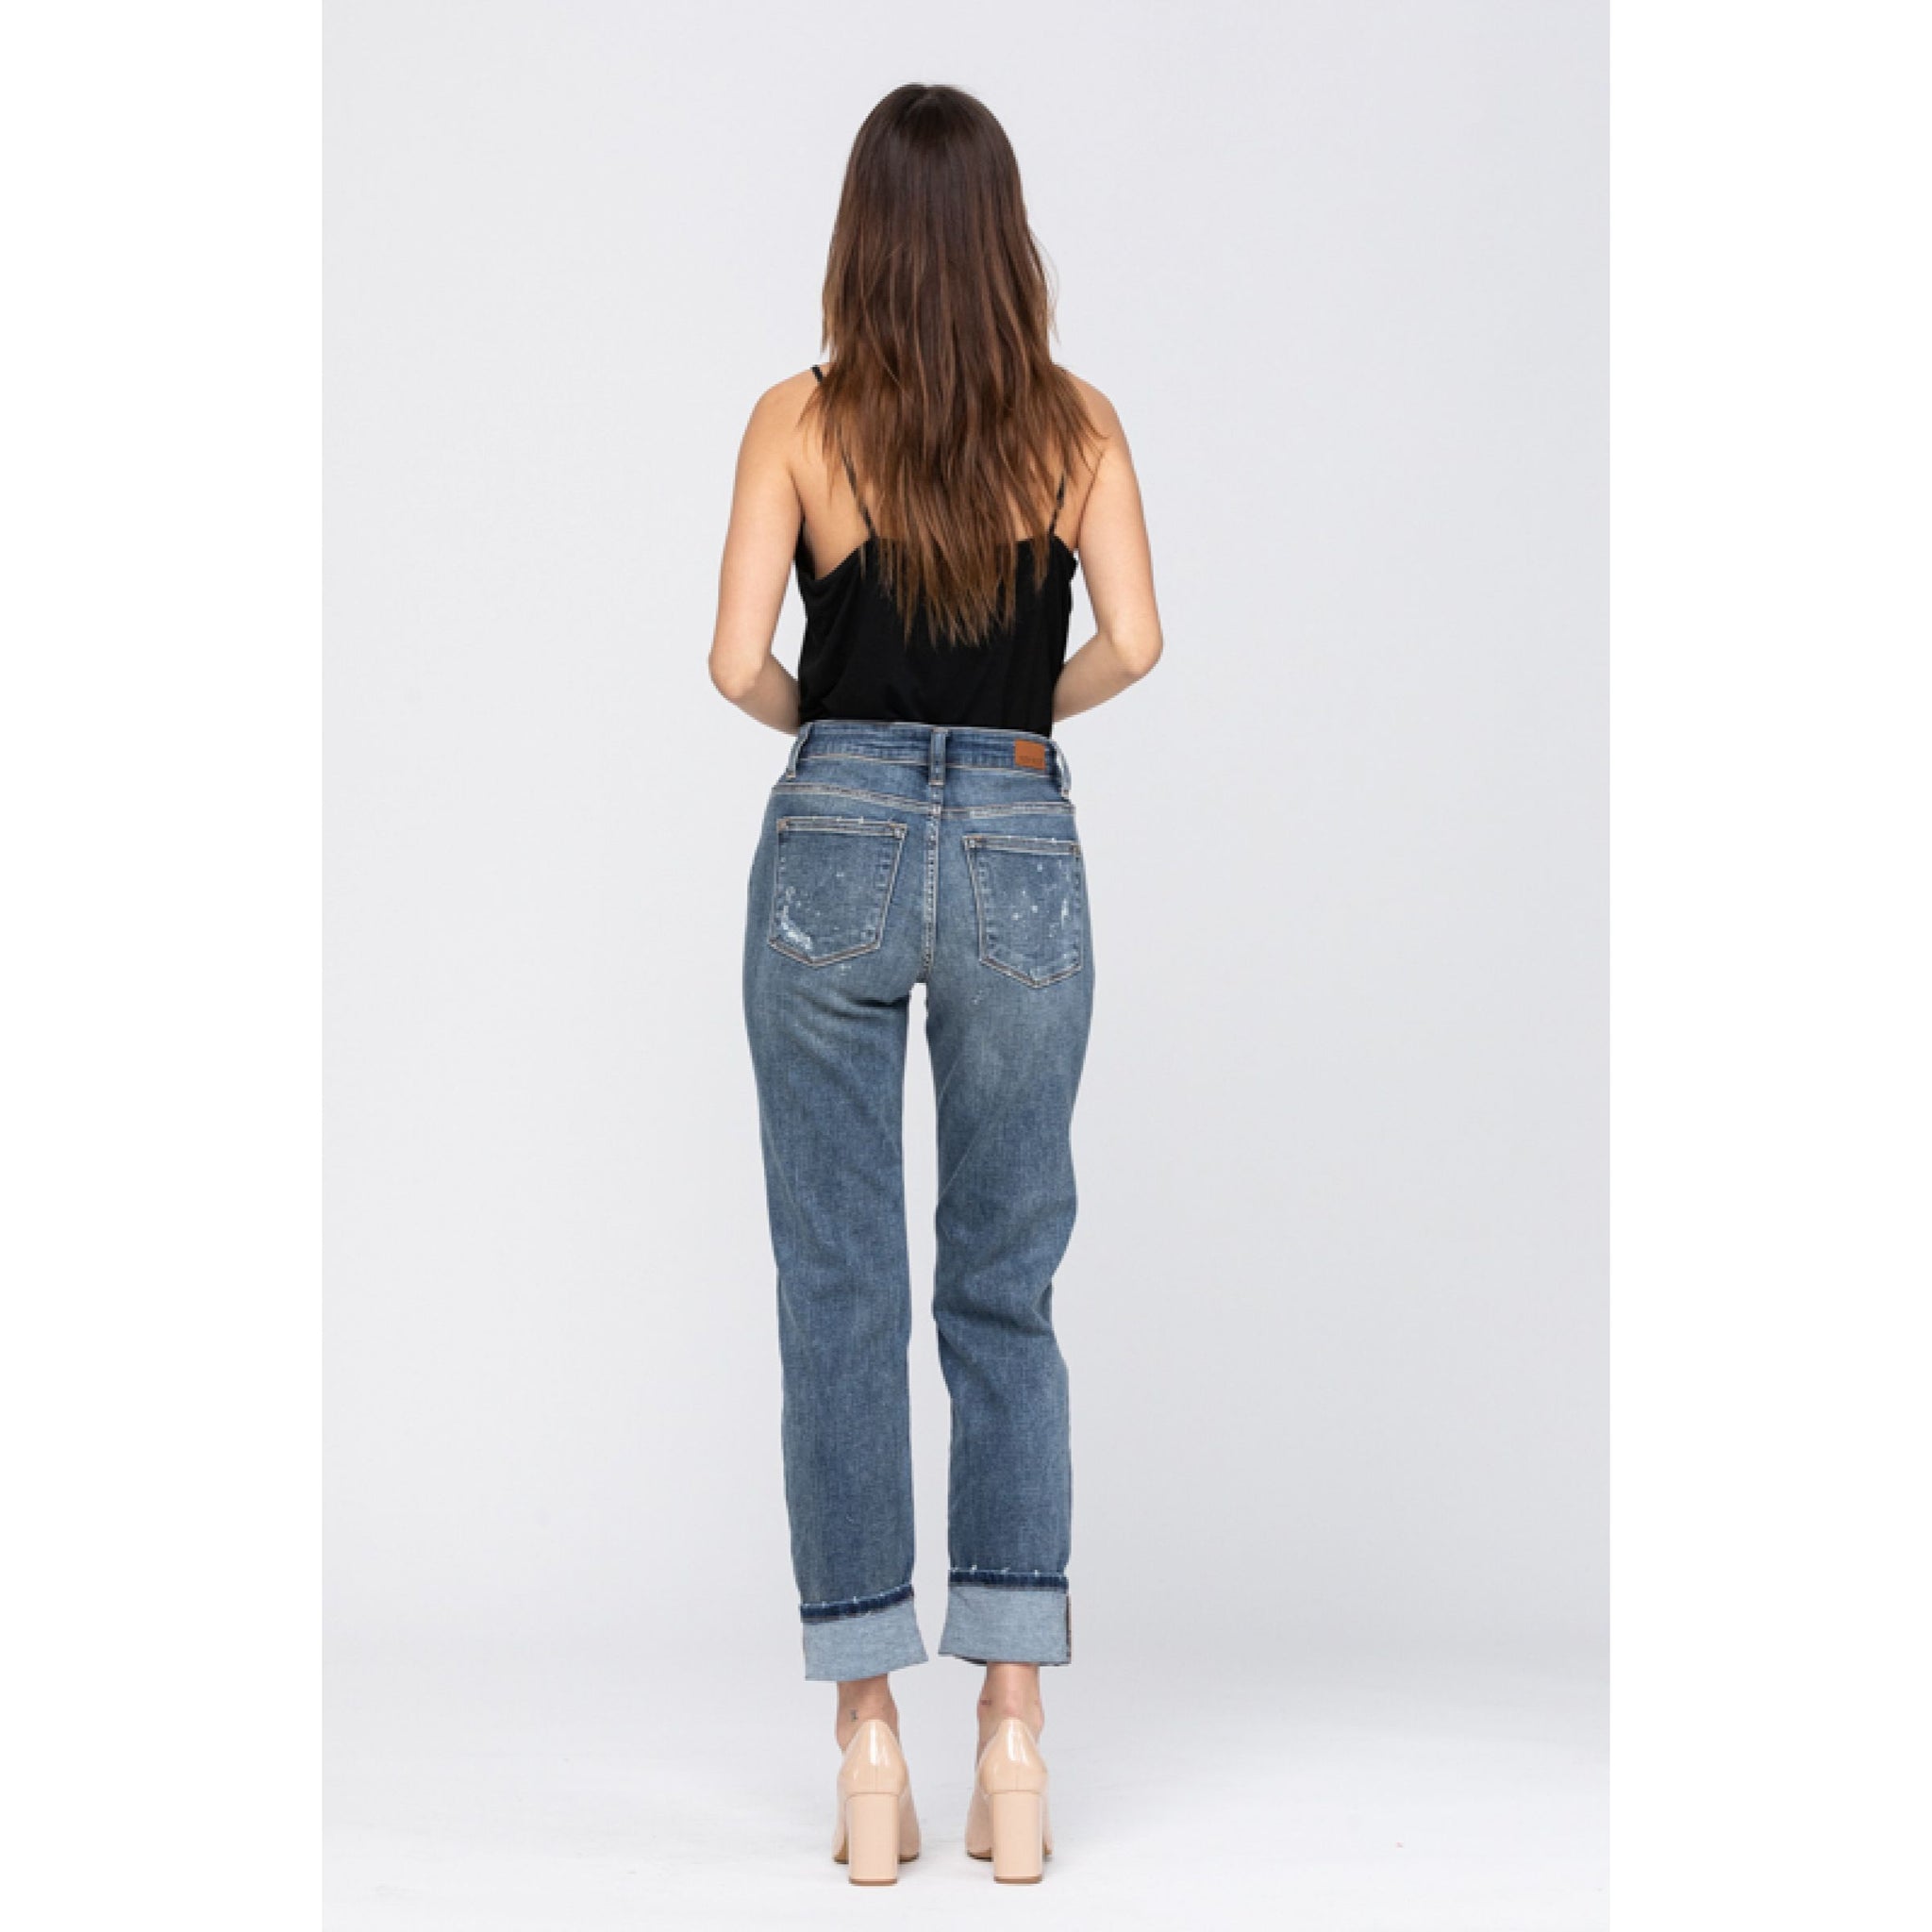 Judy Blue Bleach Boyfriend Jeans - Style 82363 - Truly Simple Boutique